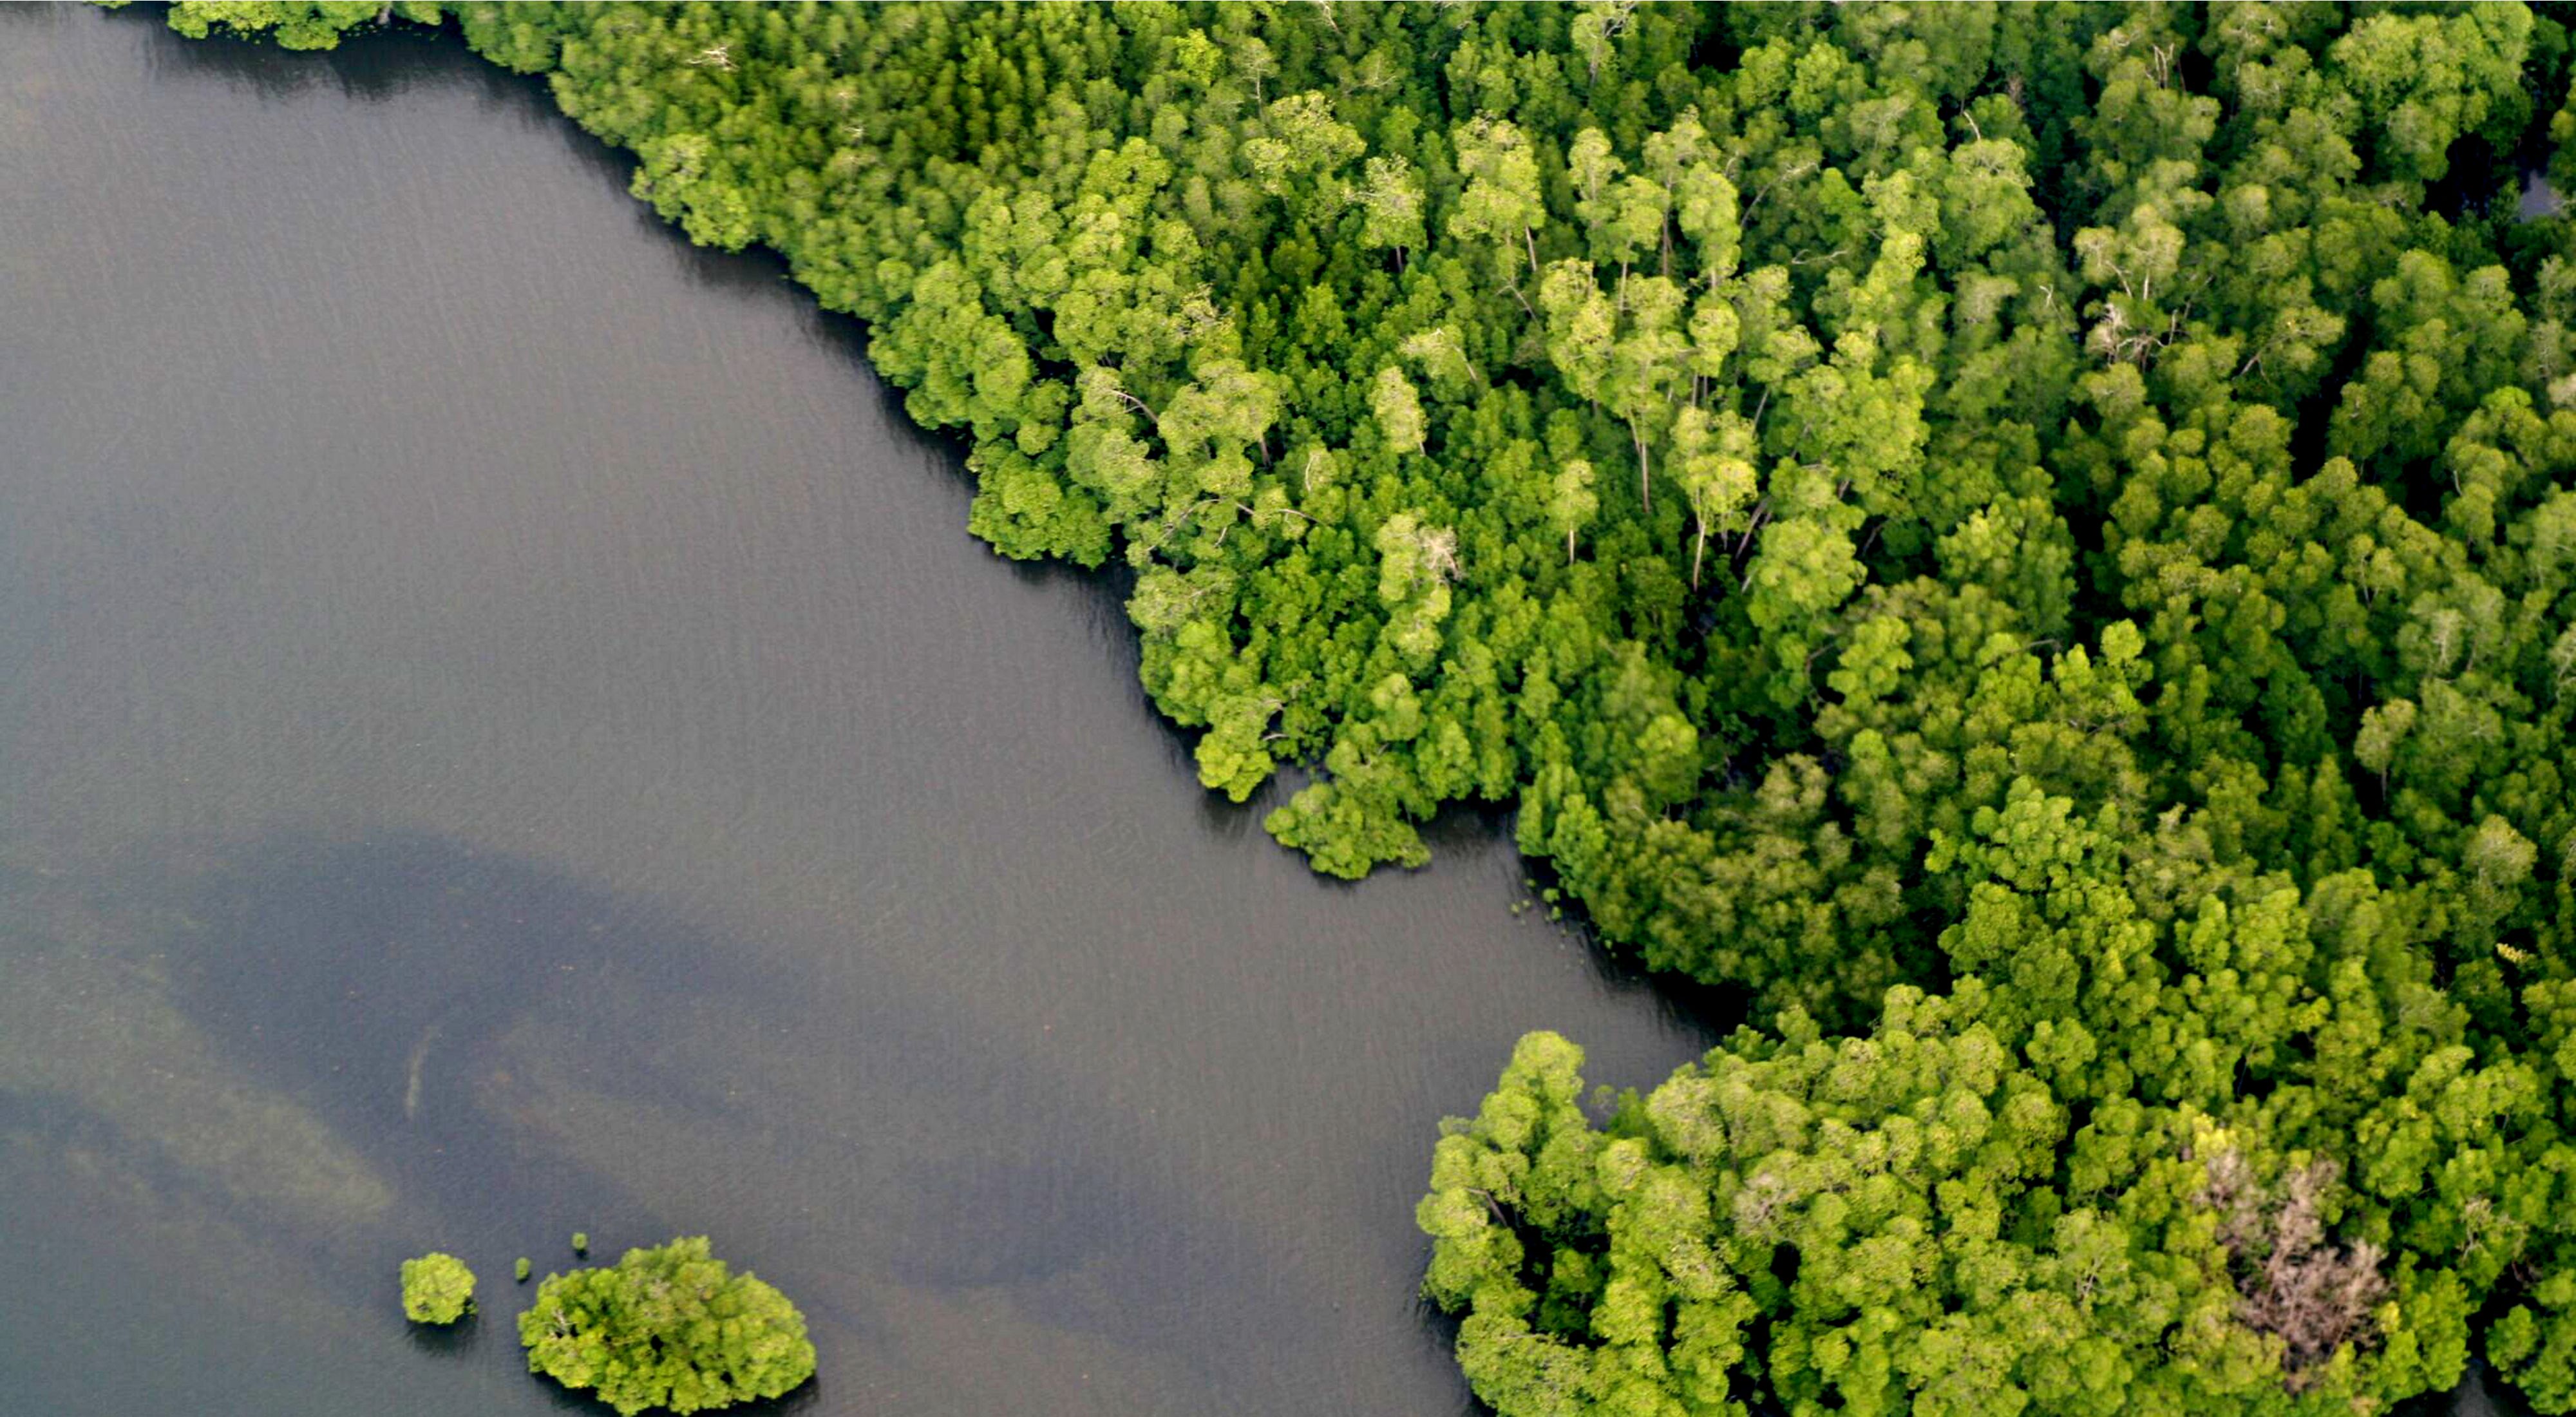 Hutan mangrove memiliki fungsi ekologis, yaitu